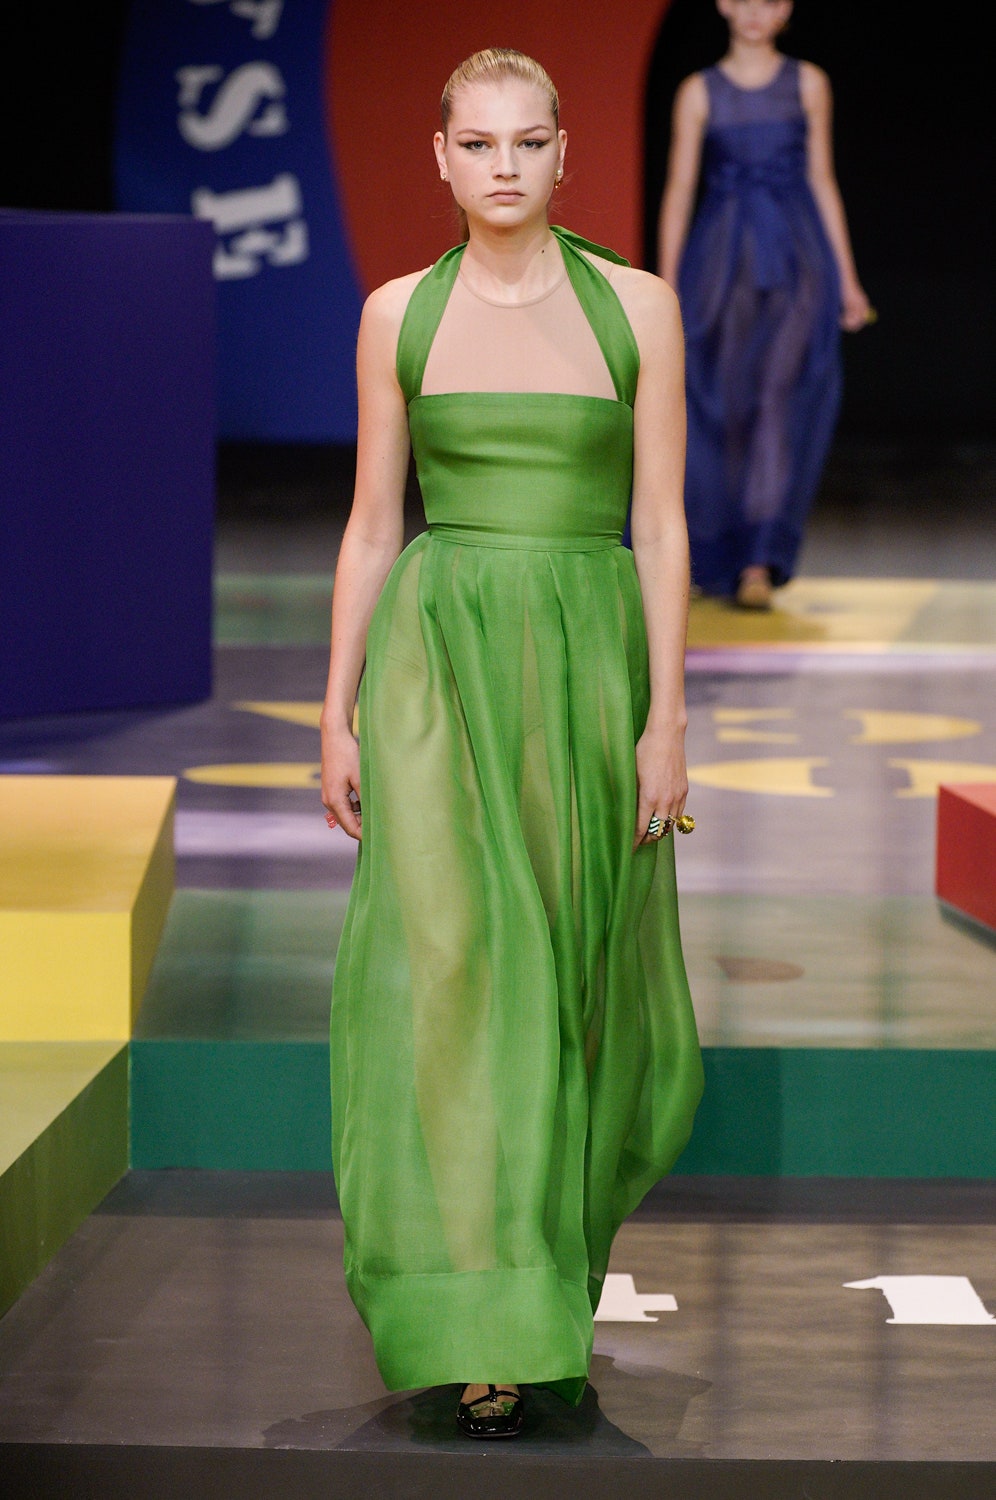 Dior green dress 2022 | Dresses Images 2022